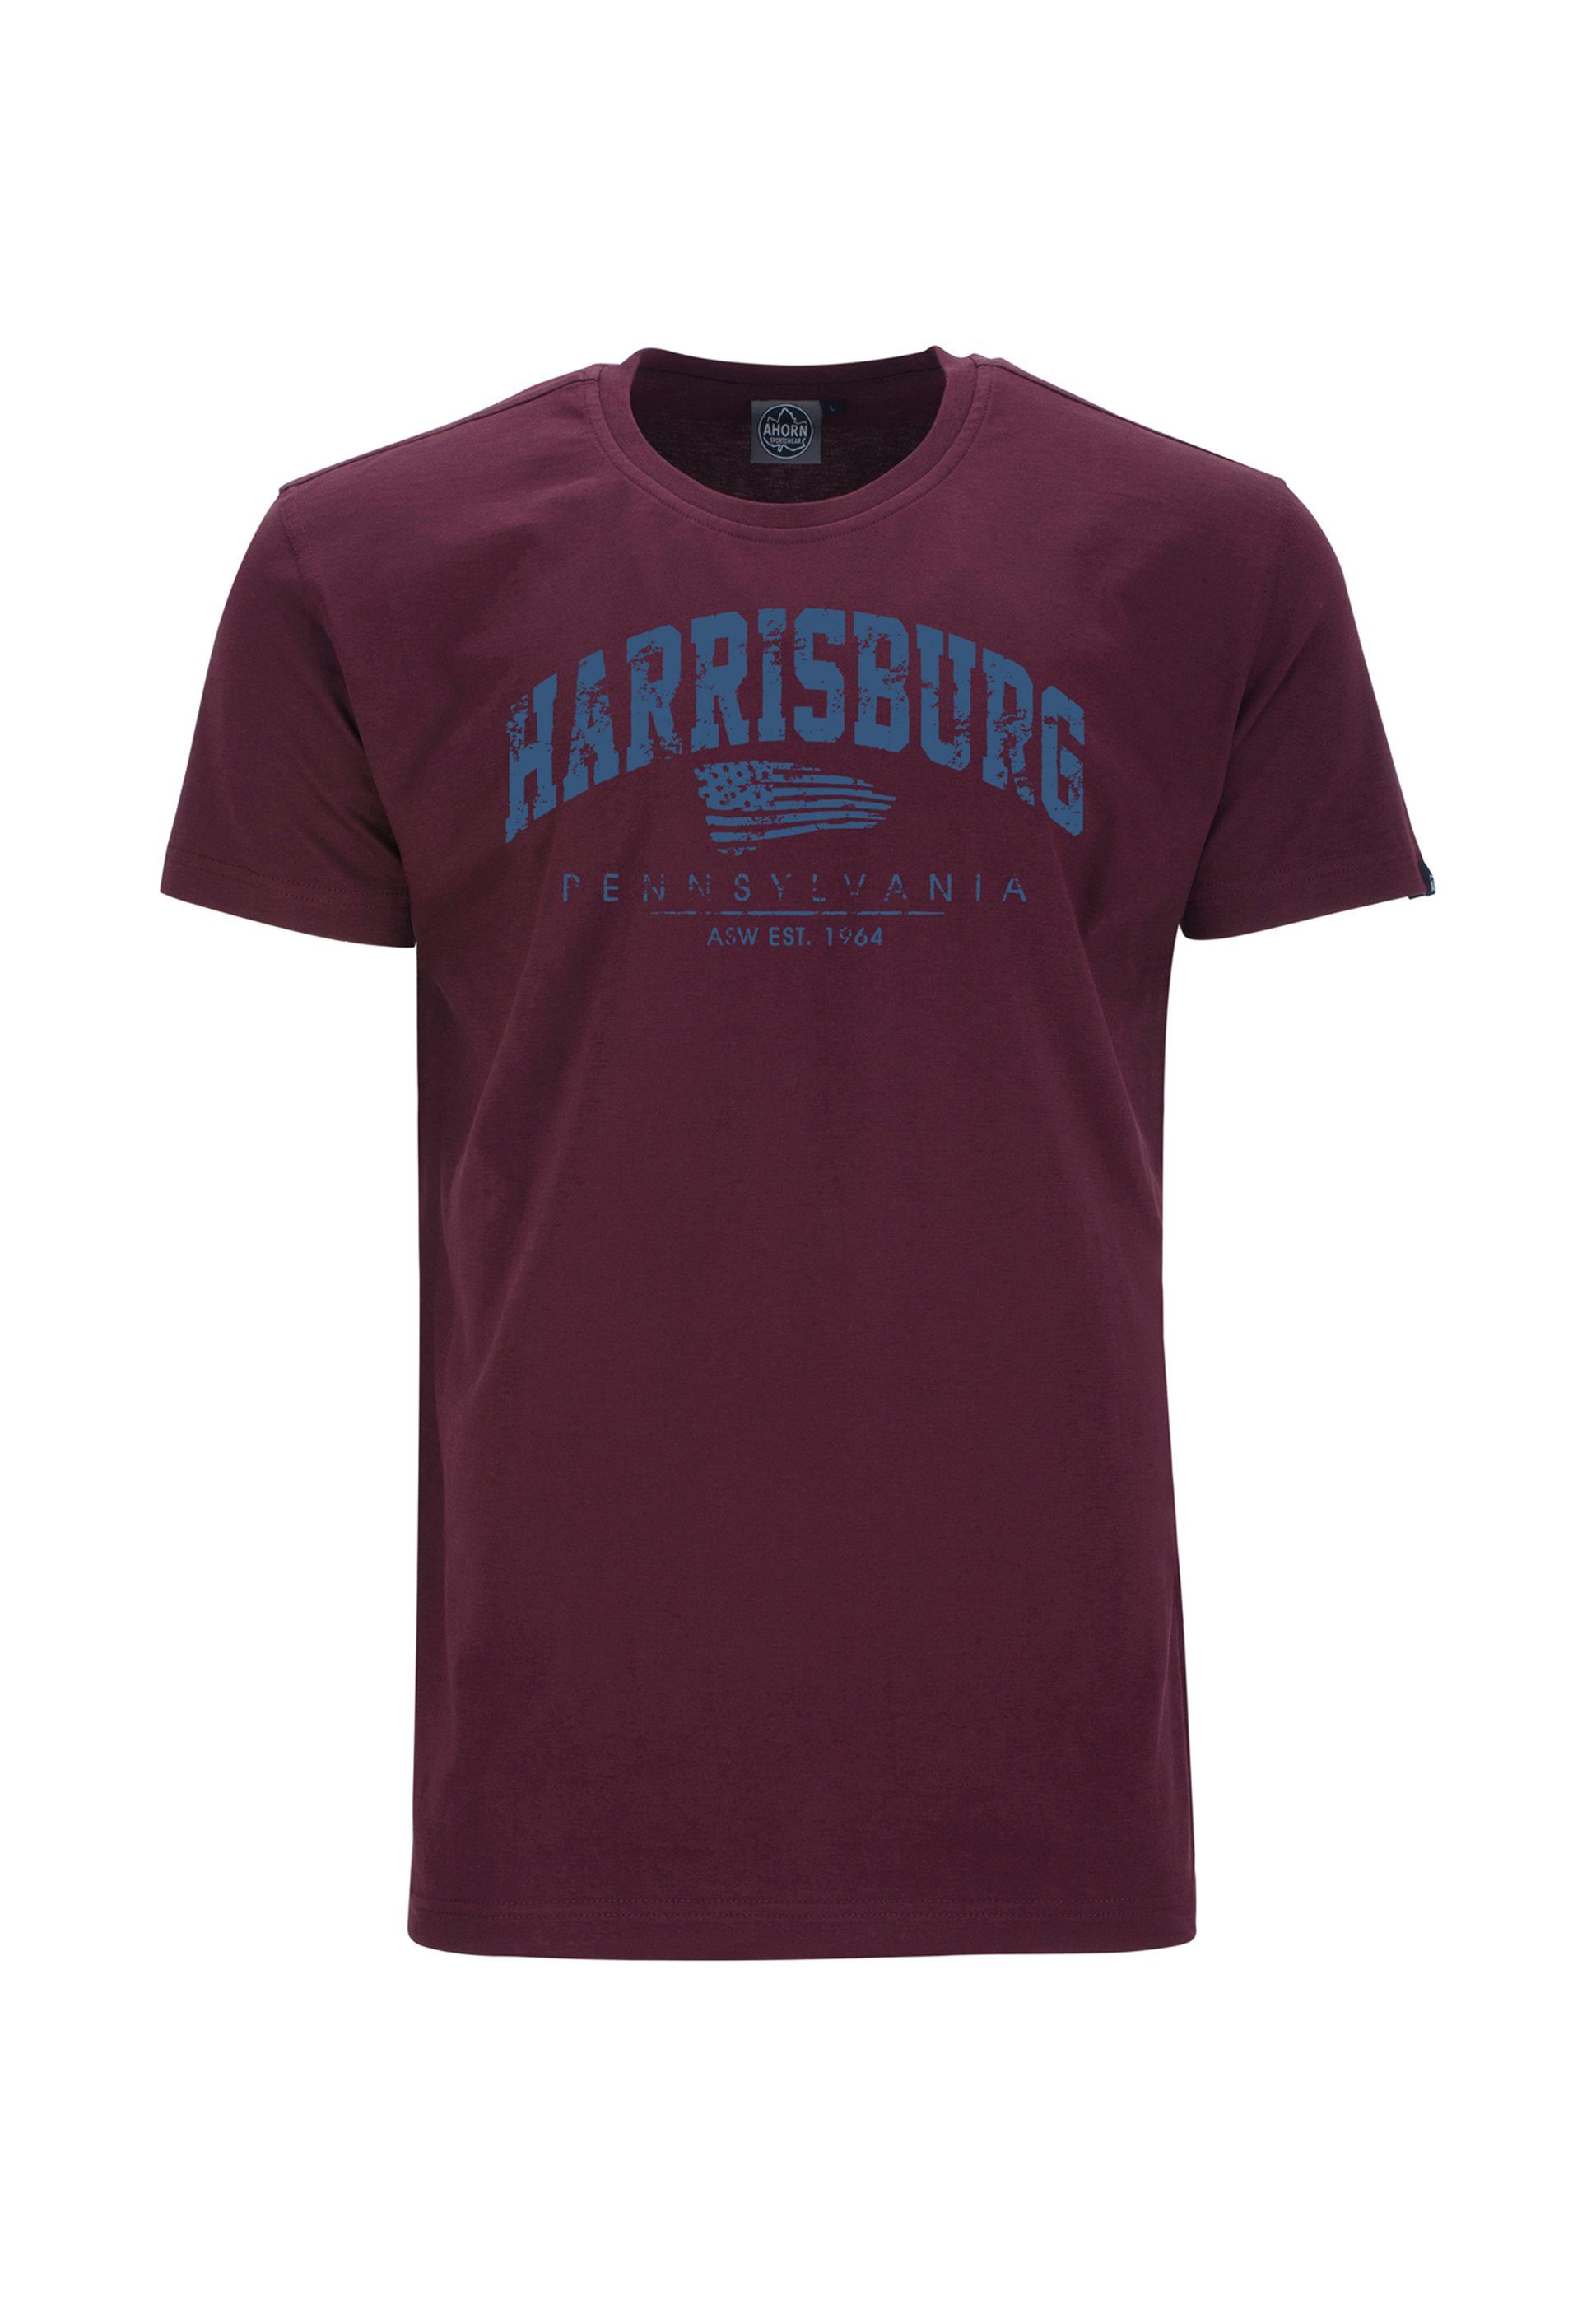 AHORN SPORTSWEAR T-Shirt HARRISBURG_ATLANTIC BLUE Frontprint mit bordeaux modischem